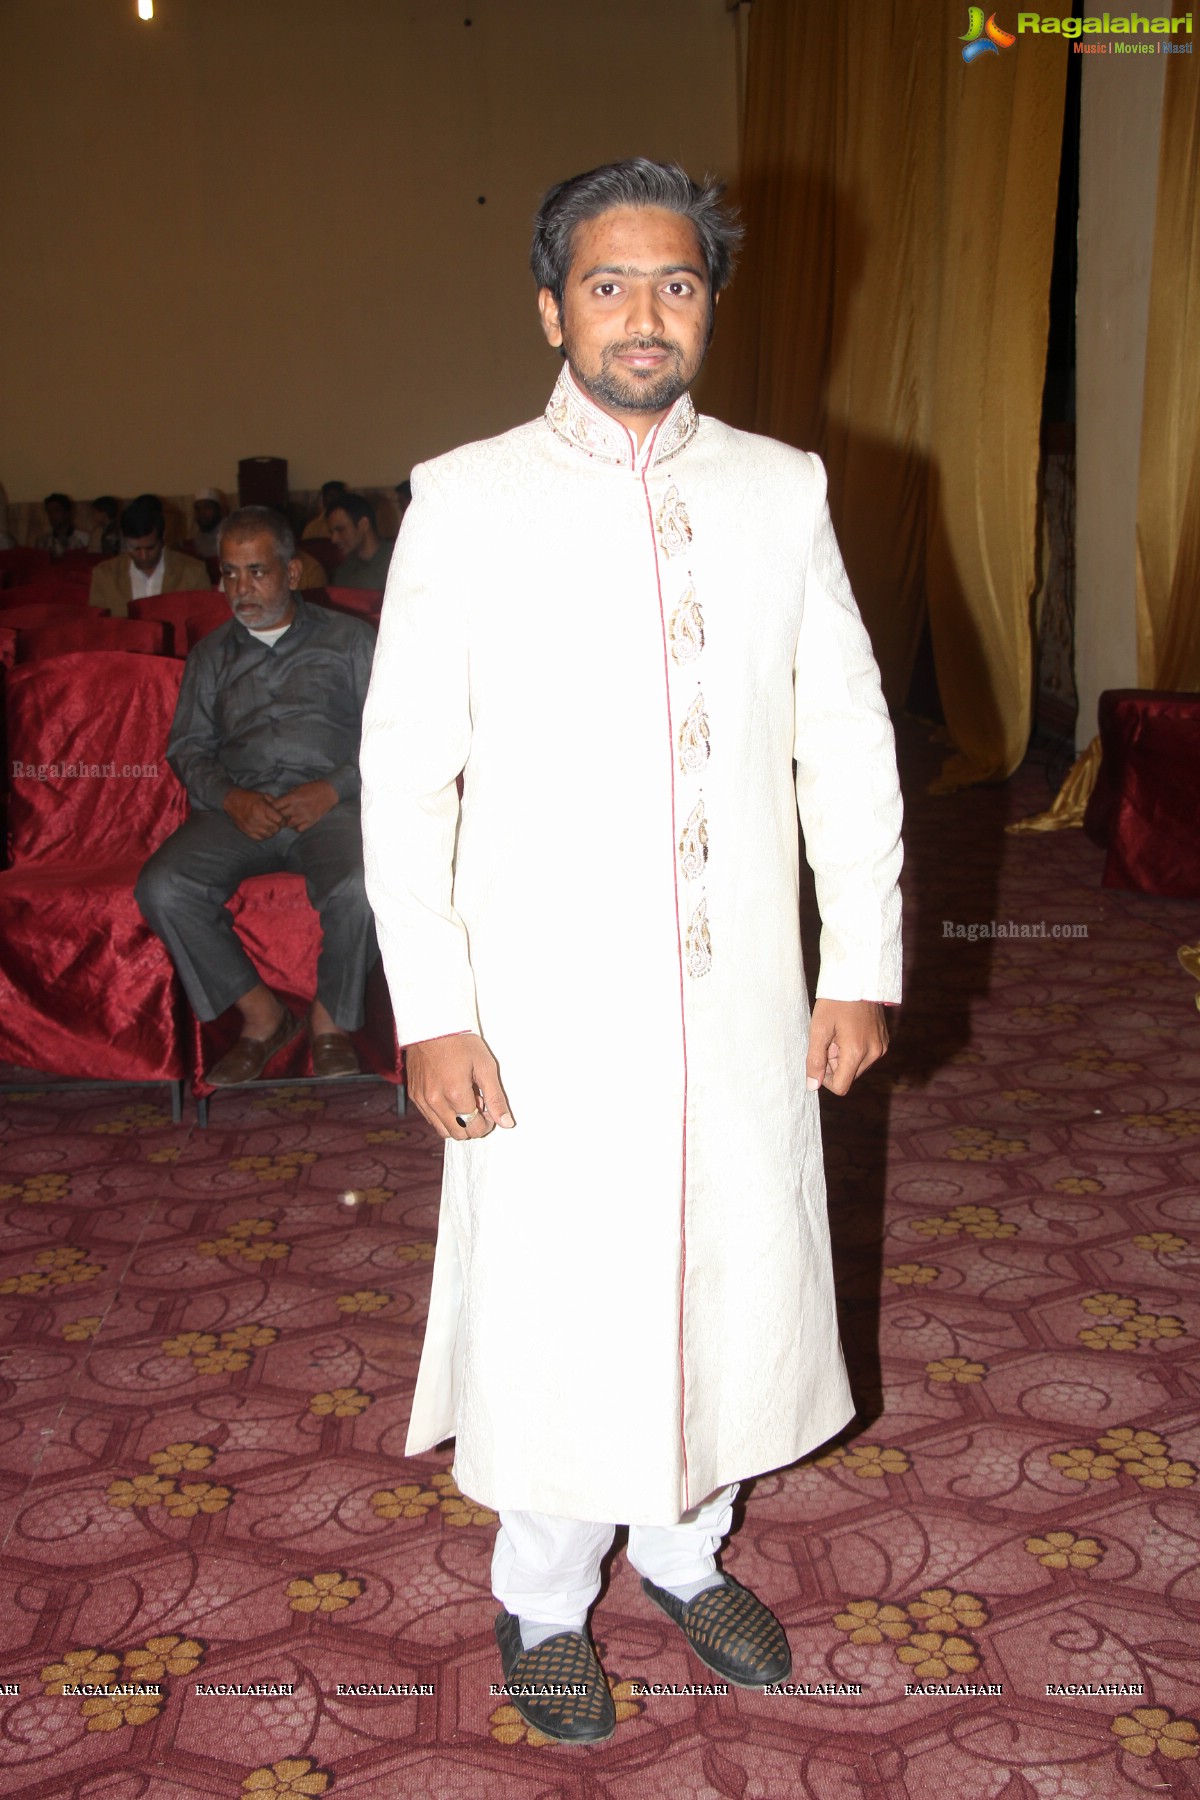 Mohammed Javeed Wedding Reception at Taj Palace, Hyderabad